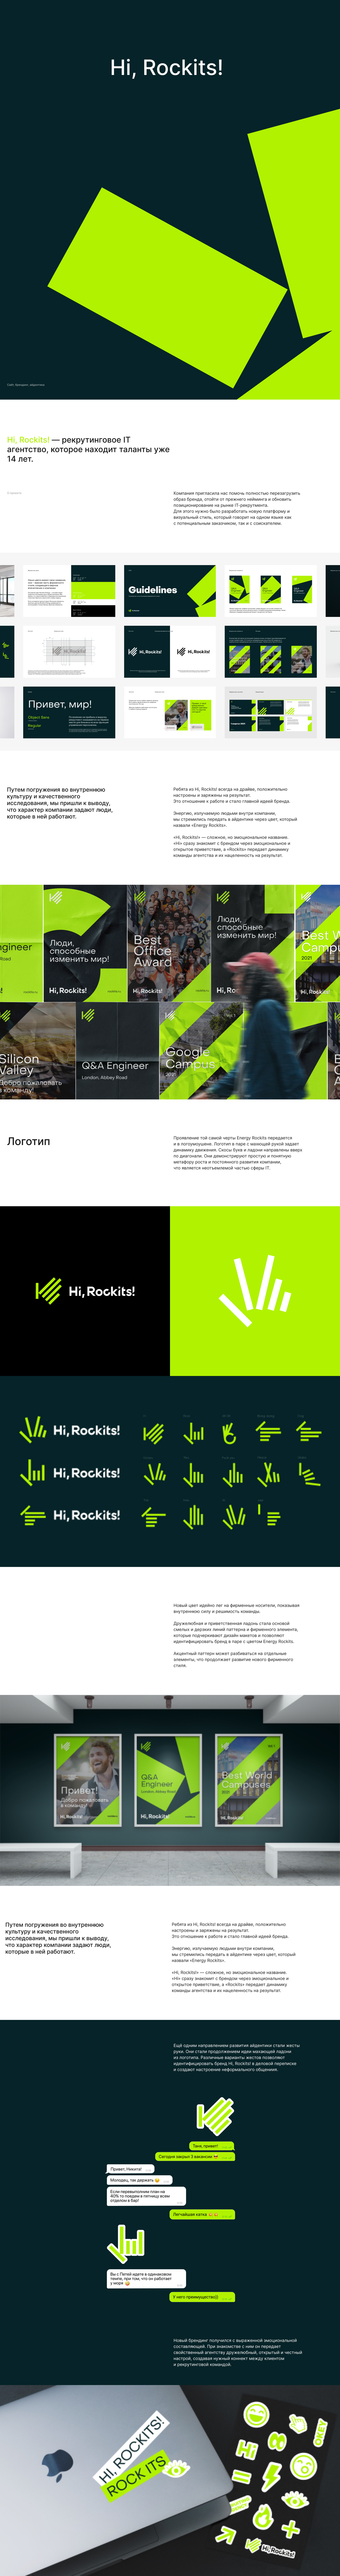 Hi, Rockits! — рекрутинговое IT-агентство